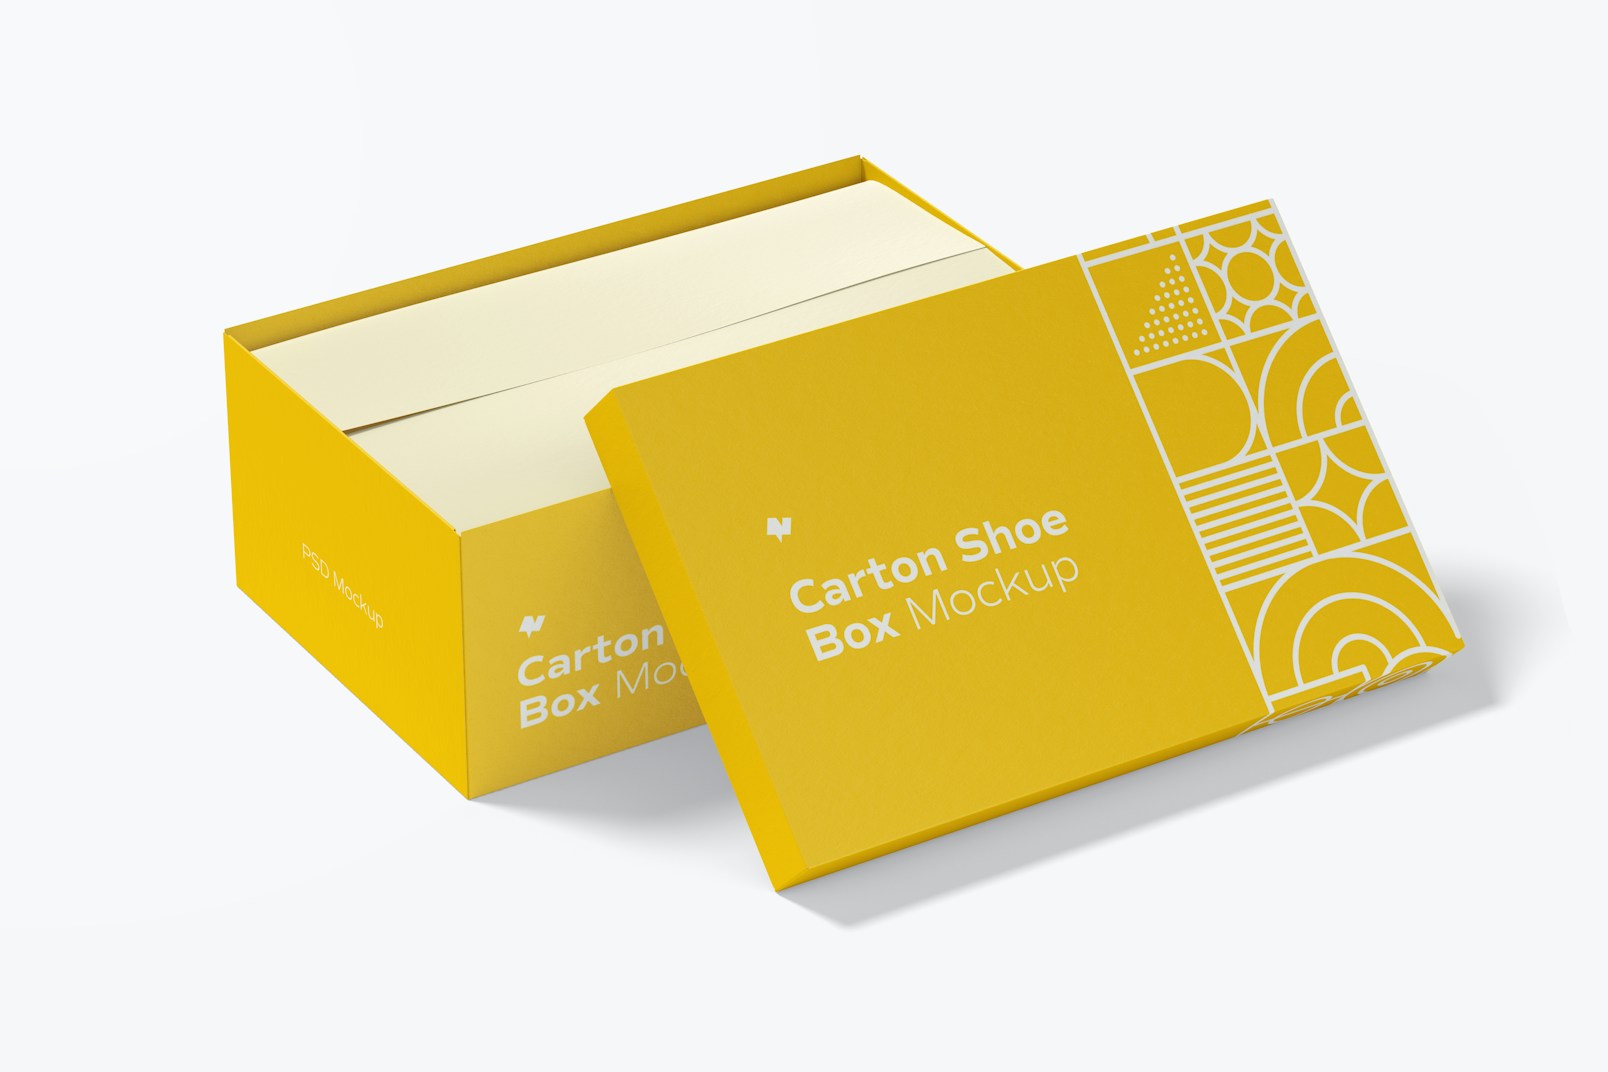 Carton Shoe Box Mockup, Opened